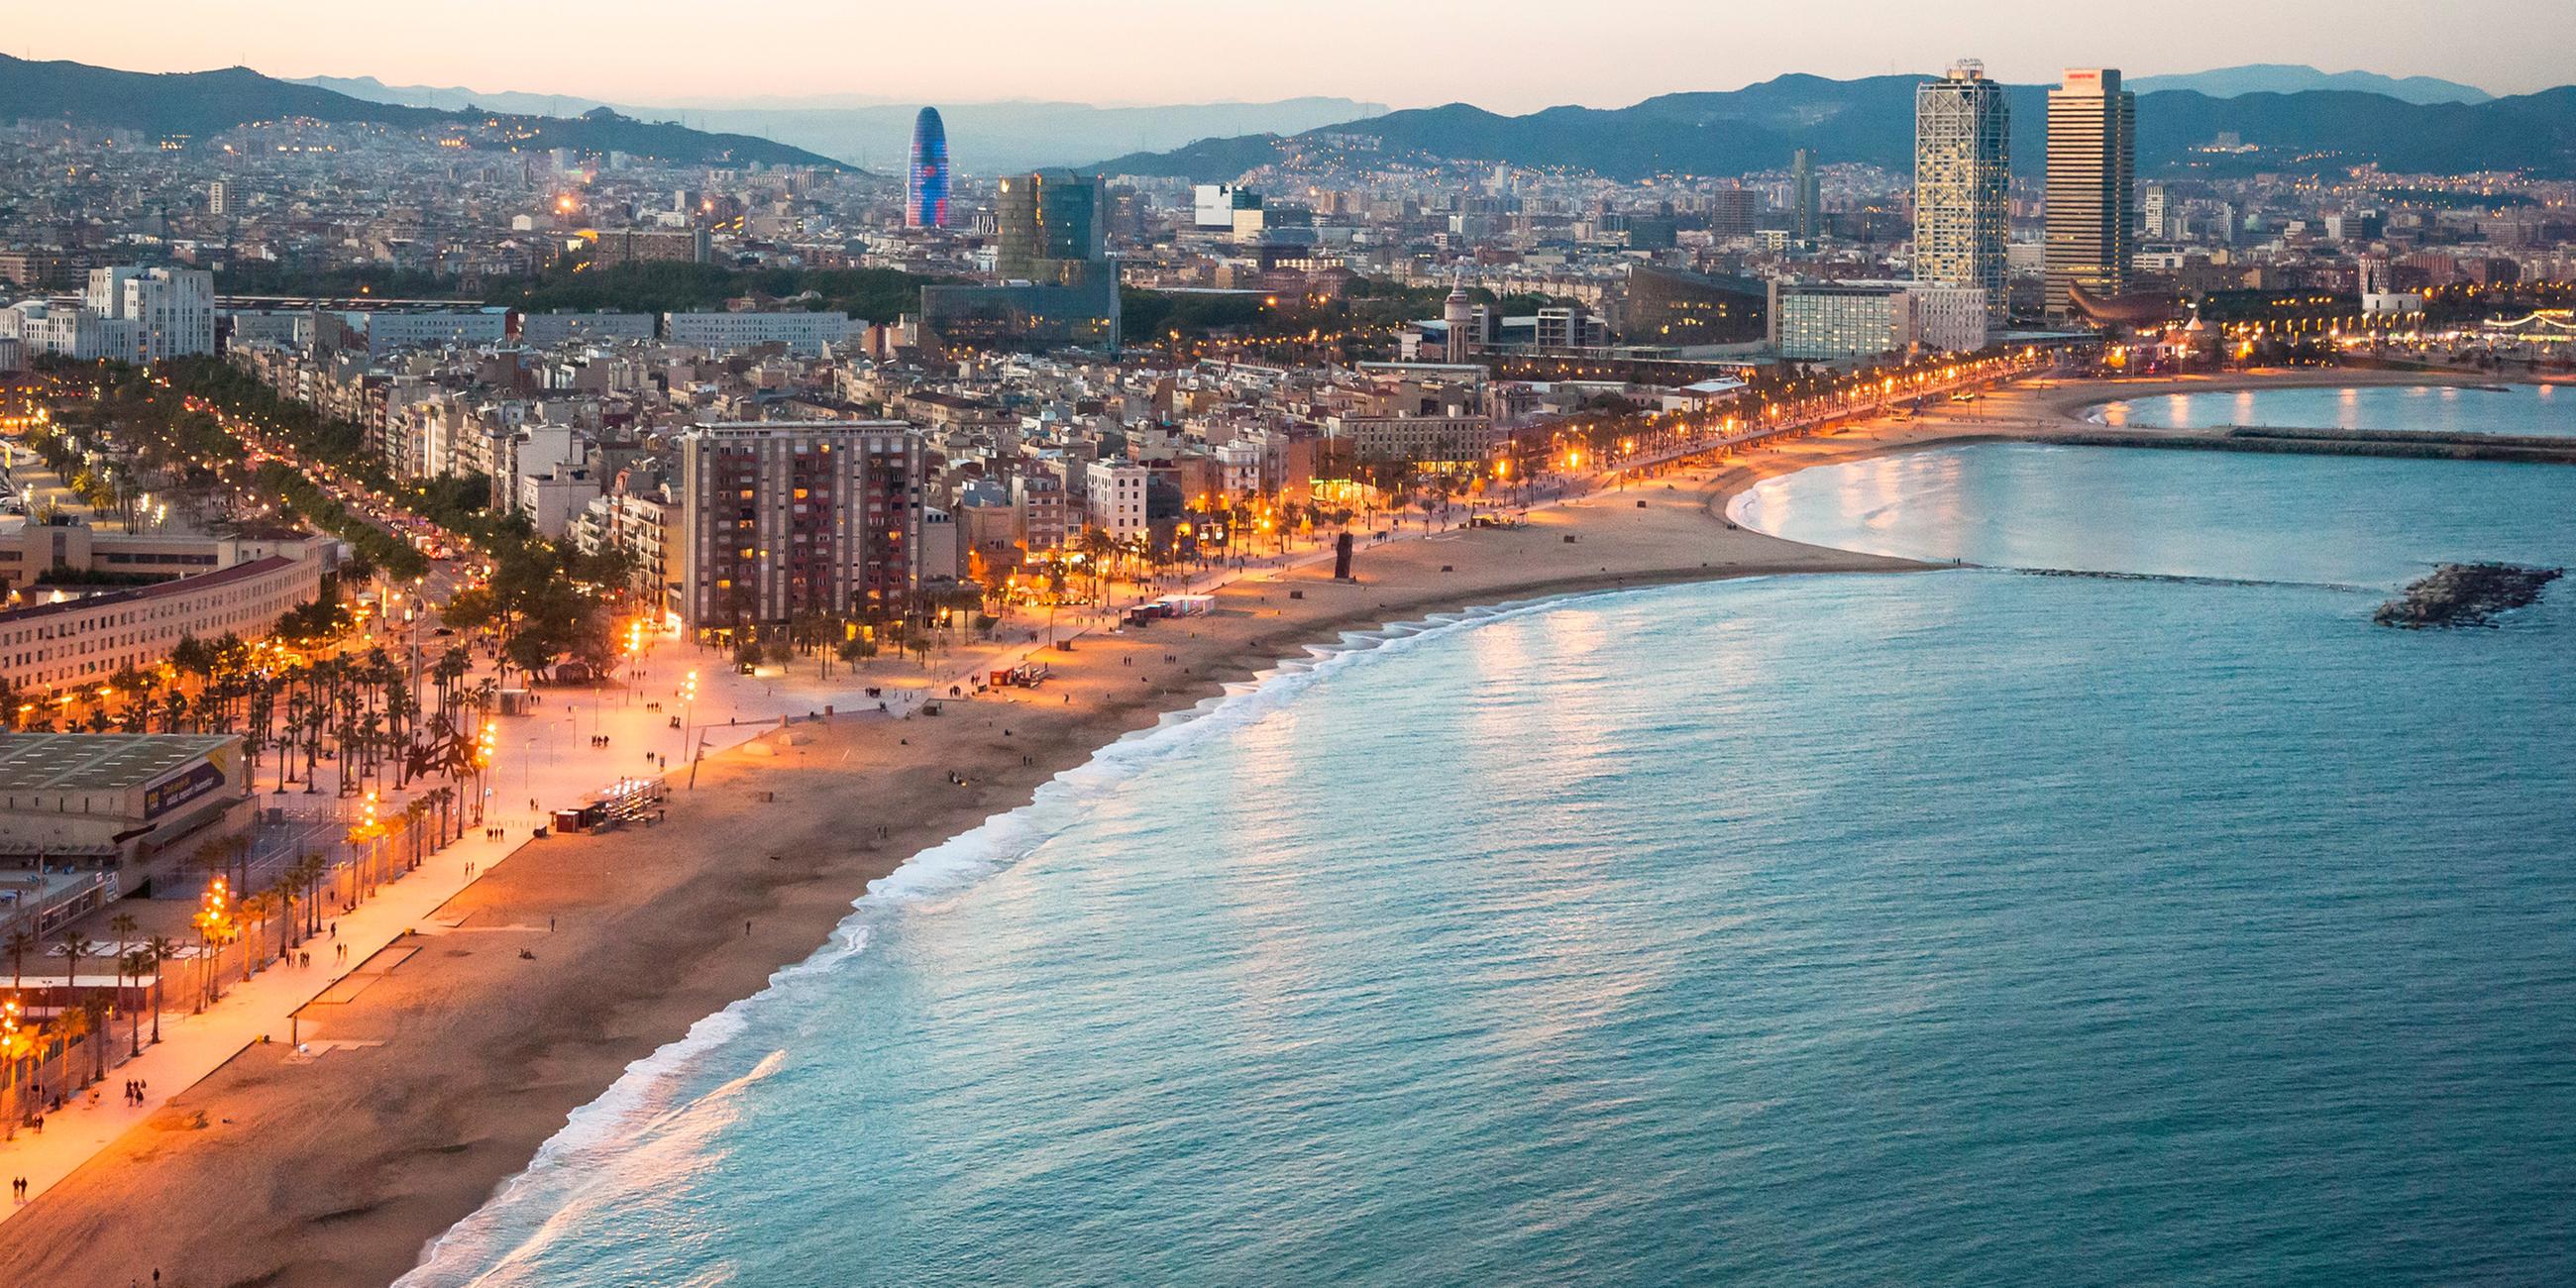 Archiv: Blick vom Hotel "W Barcelona" auf den Strand von La Barceloneta, Barcelona